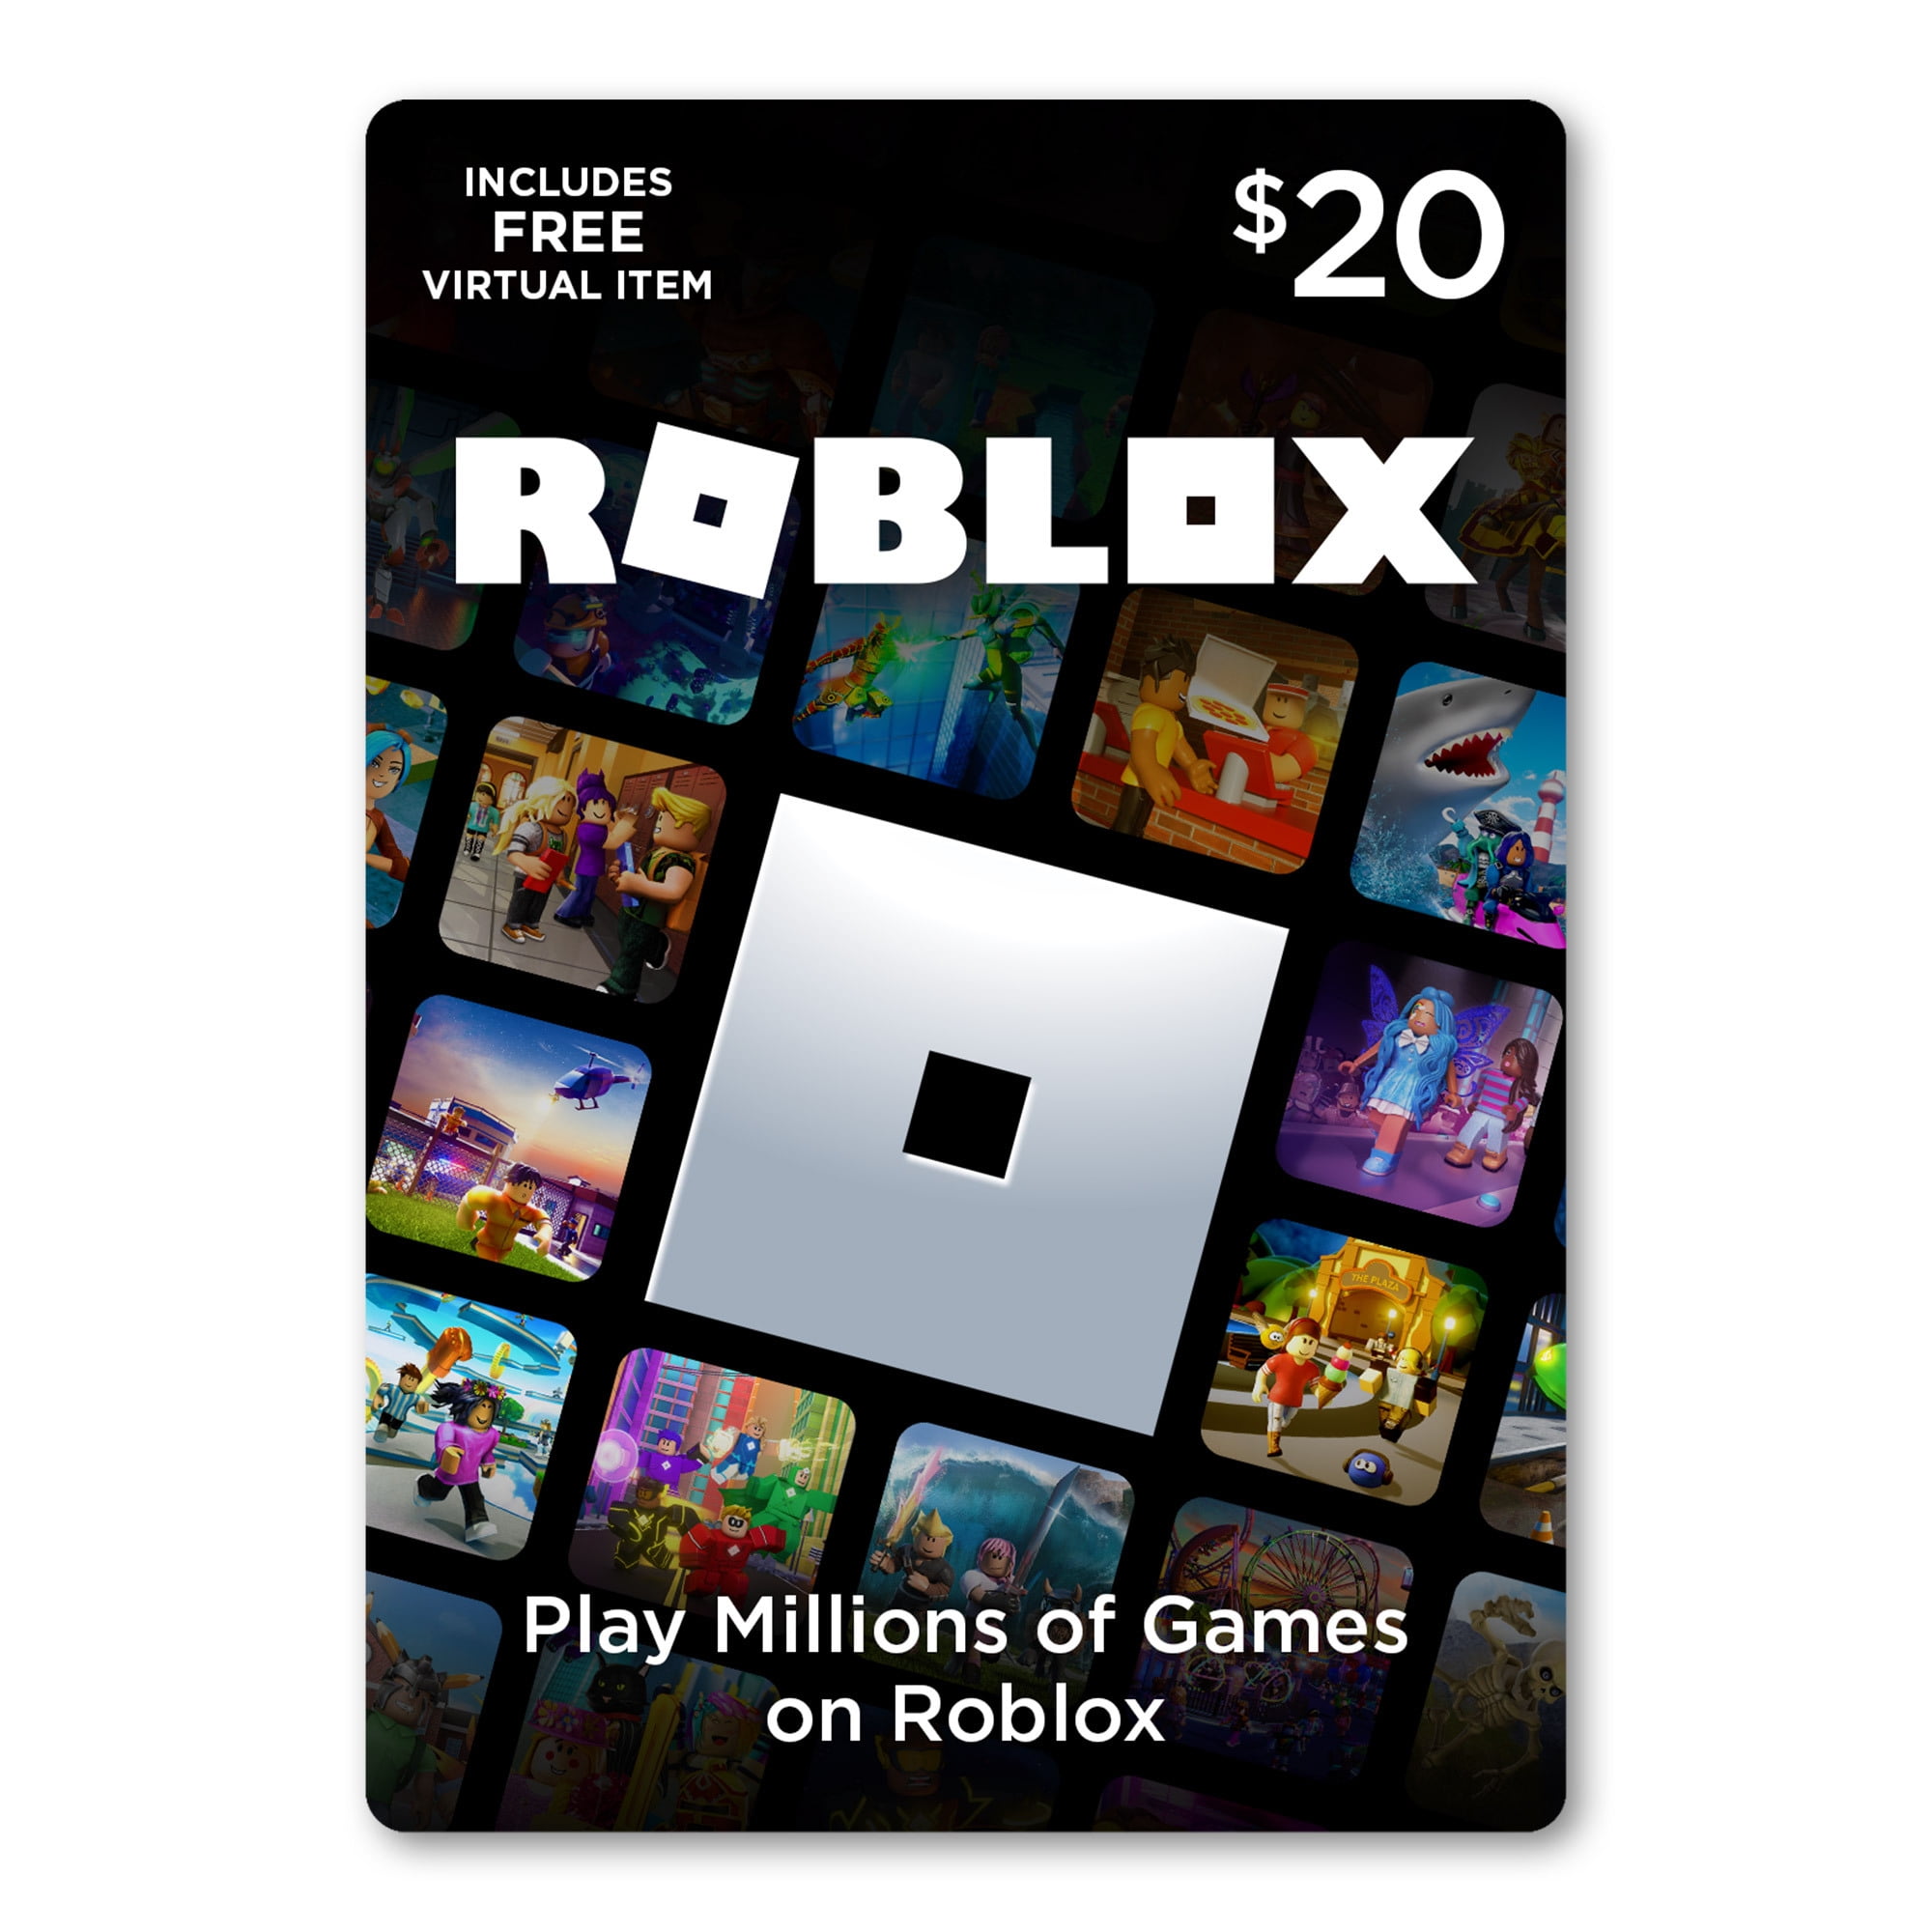 Roblox 20 Digital Gift Card Includes Exclusive Virtual Item Digital Download Walmart Com Walmart Com - target roblox card